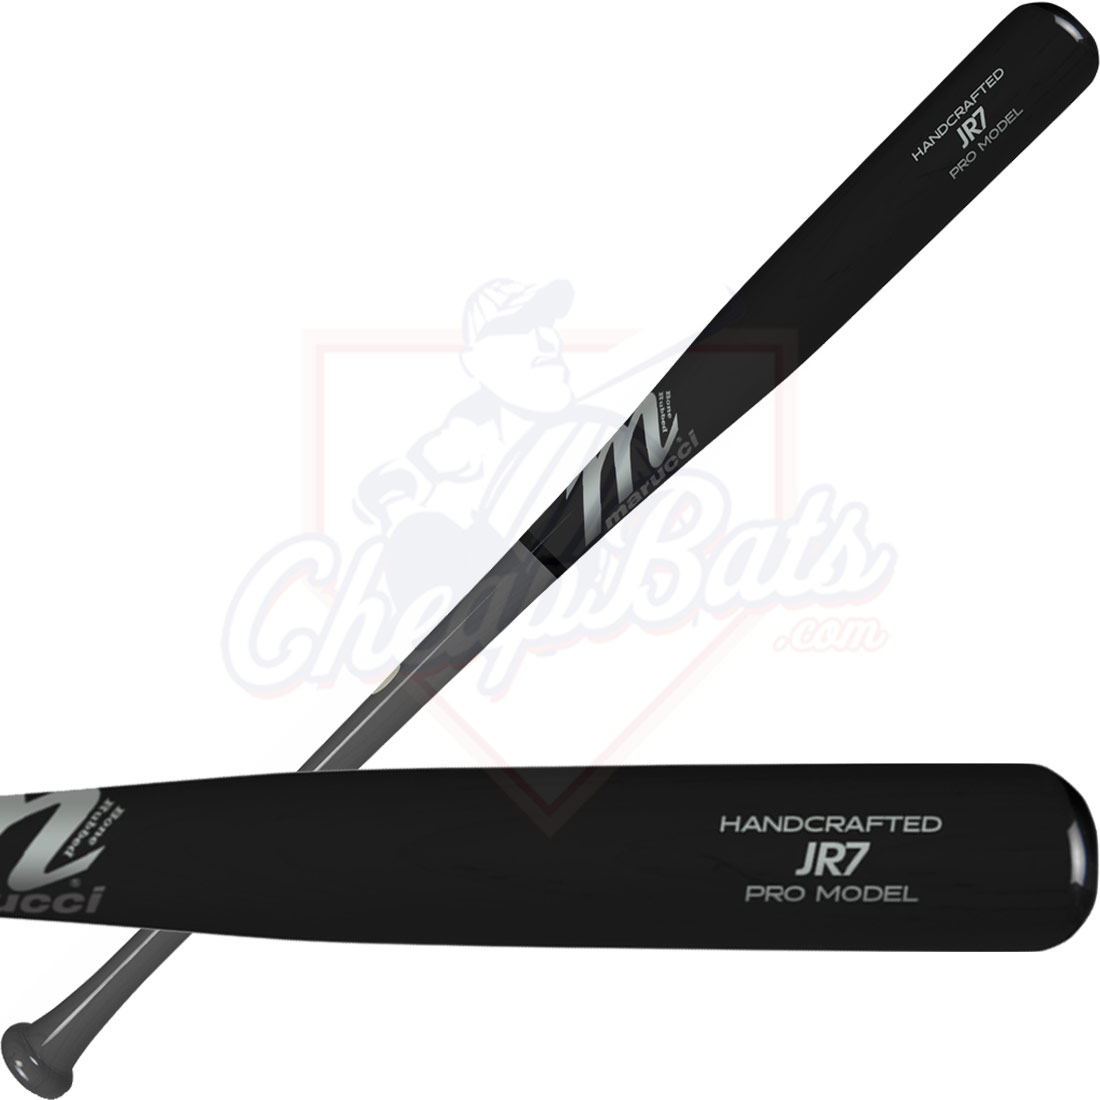 Marucci Jose Reyes Pro Model Maple Wood Baseball Bat MVE2JR7-SM/BK